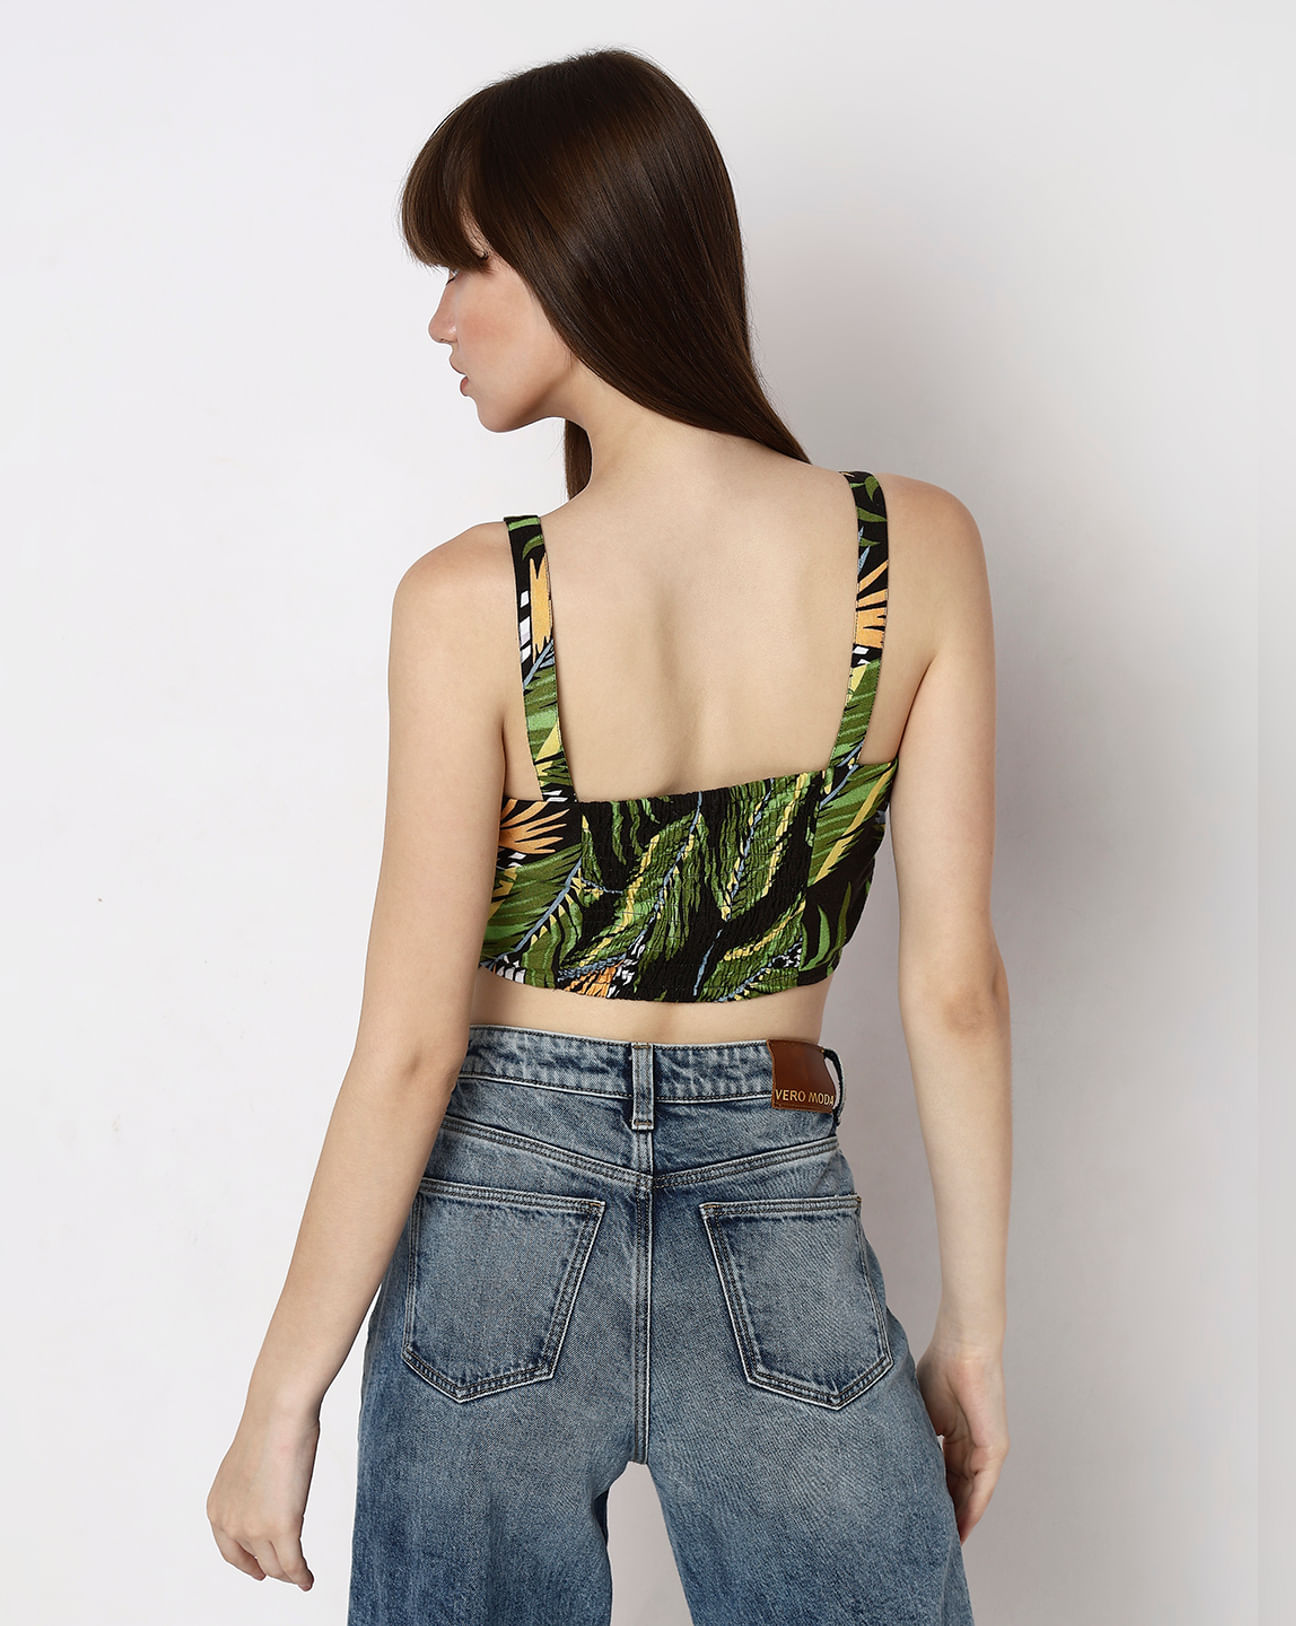 Teal Printed Crop Top With Skirt  Crop top skirt, Tropical print